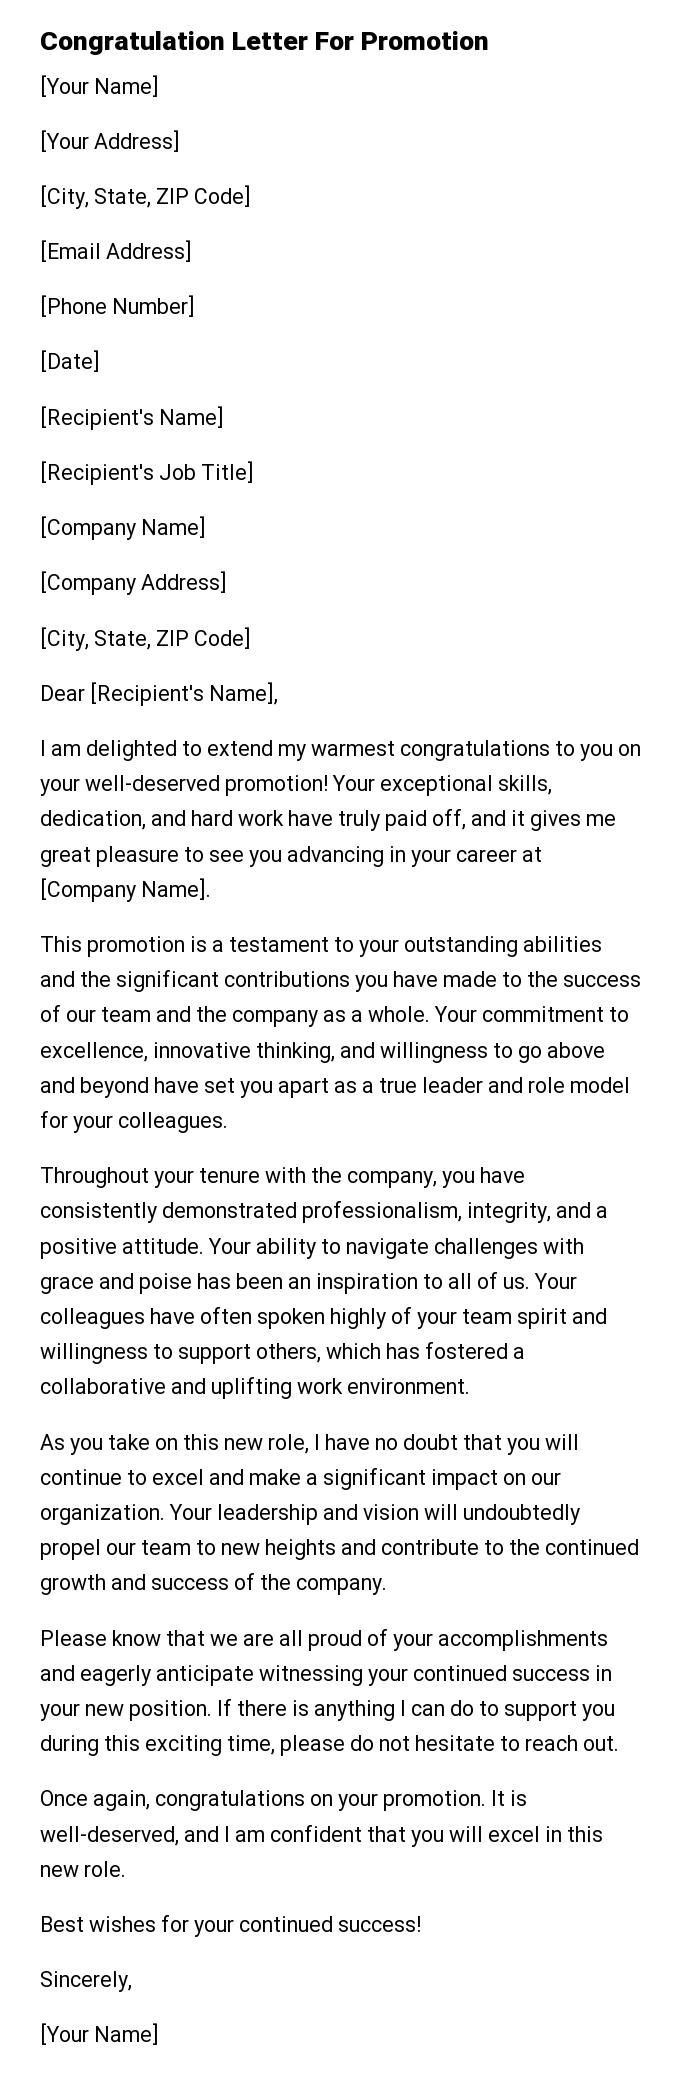 Congratulation Letter For Promotion